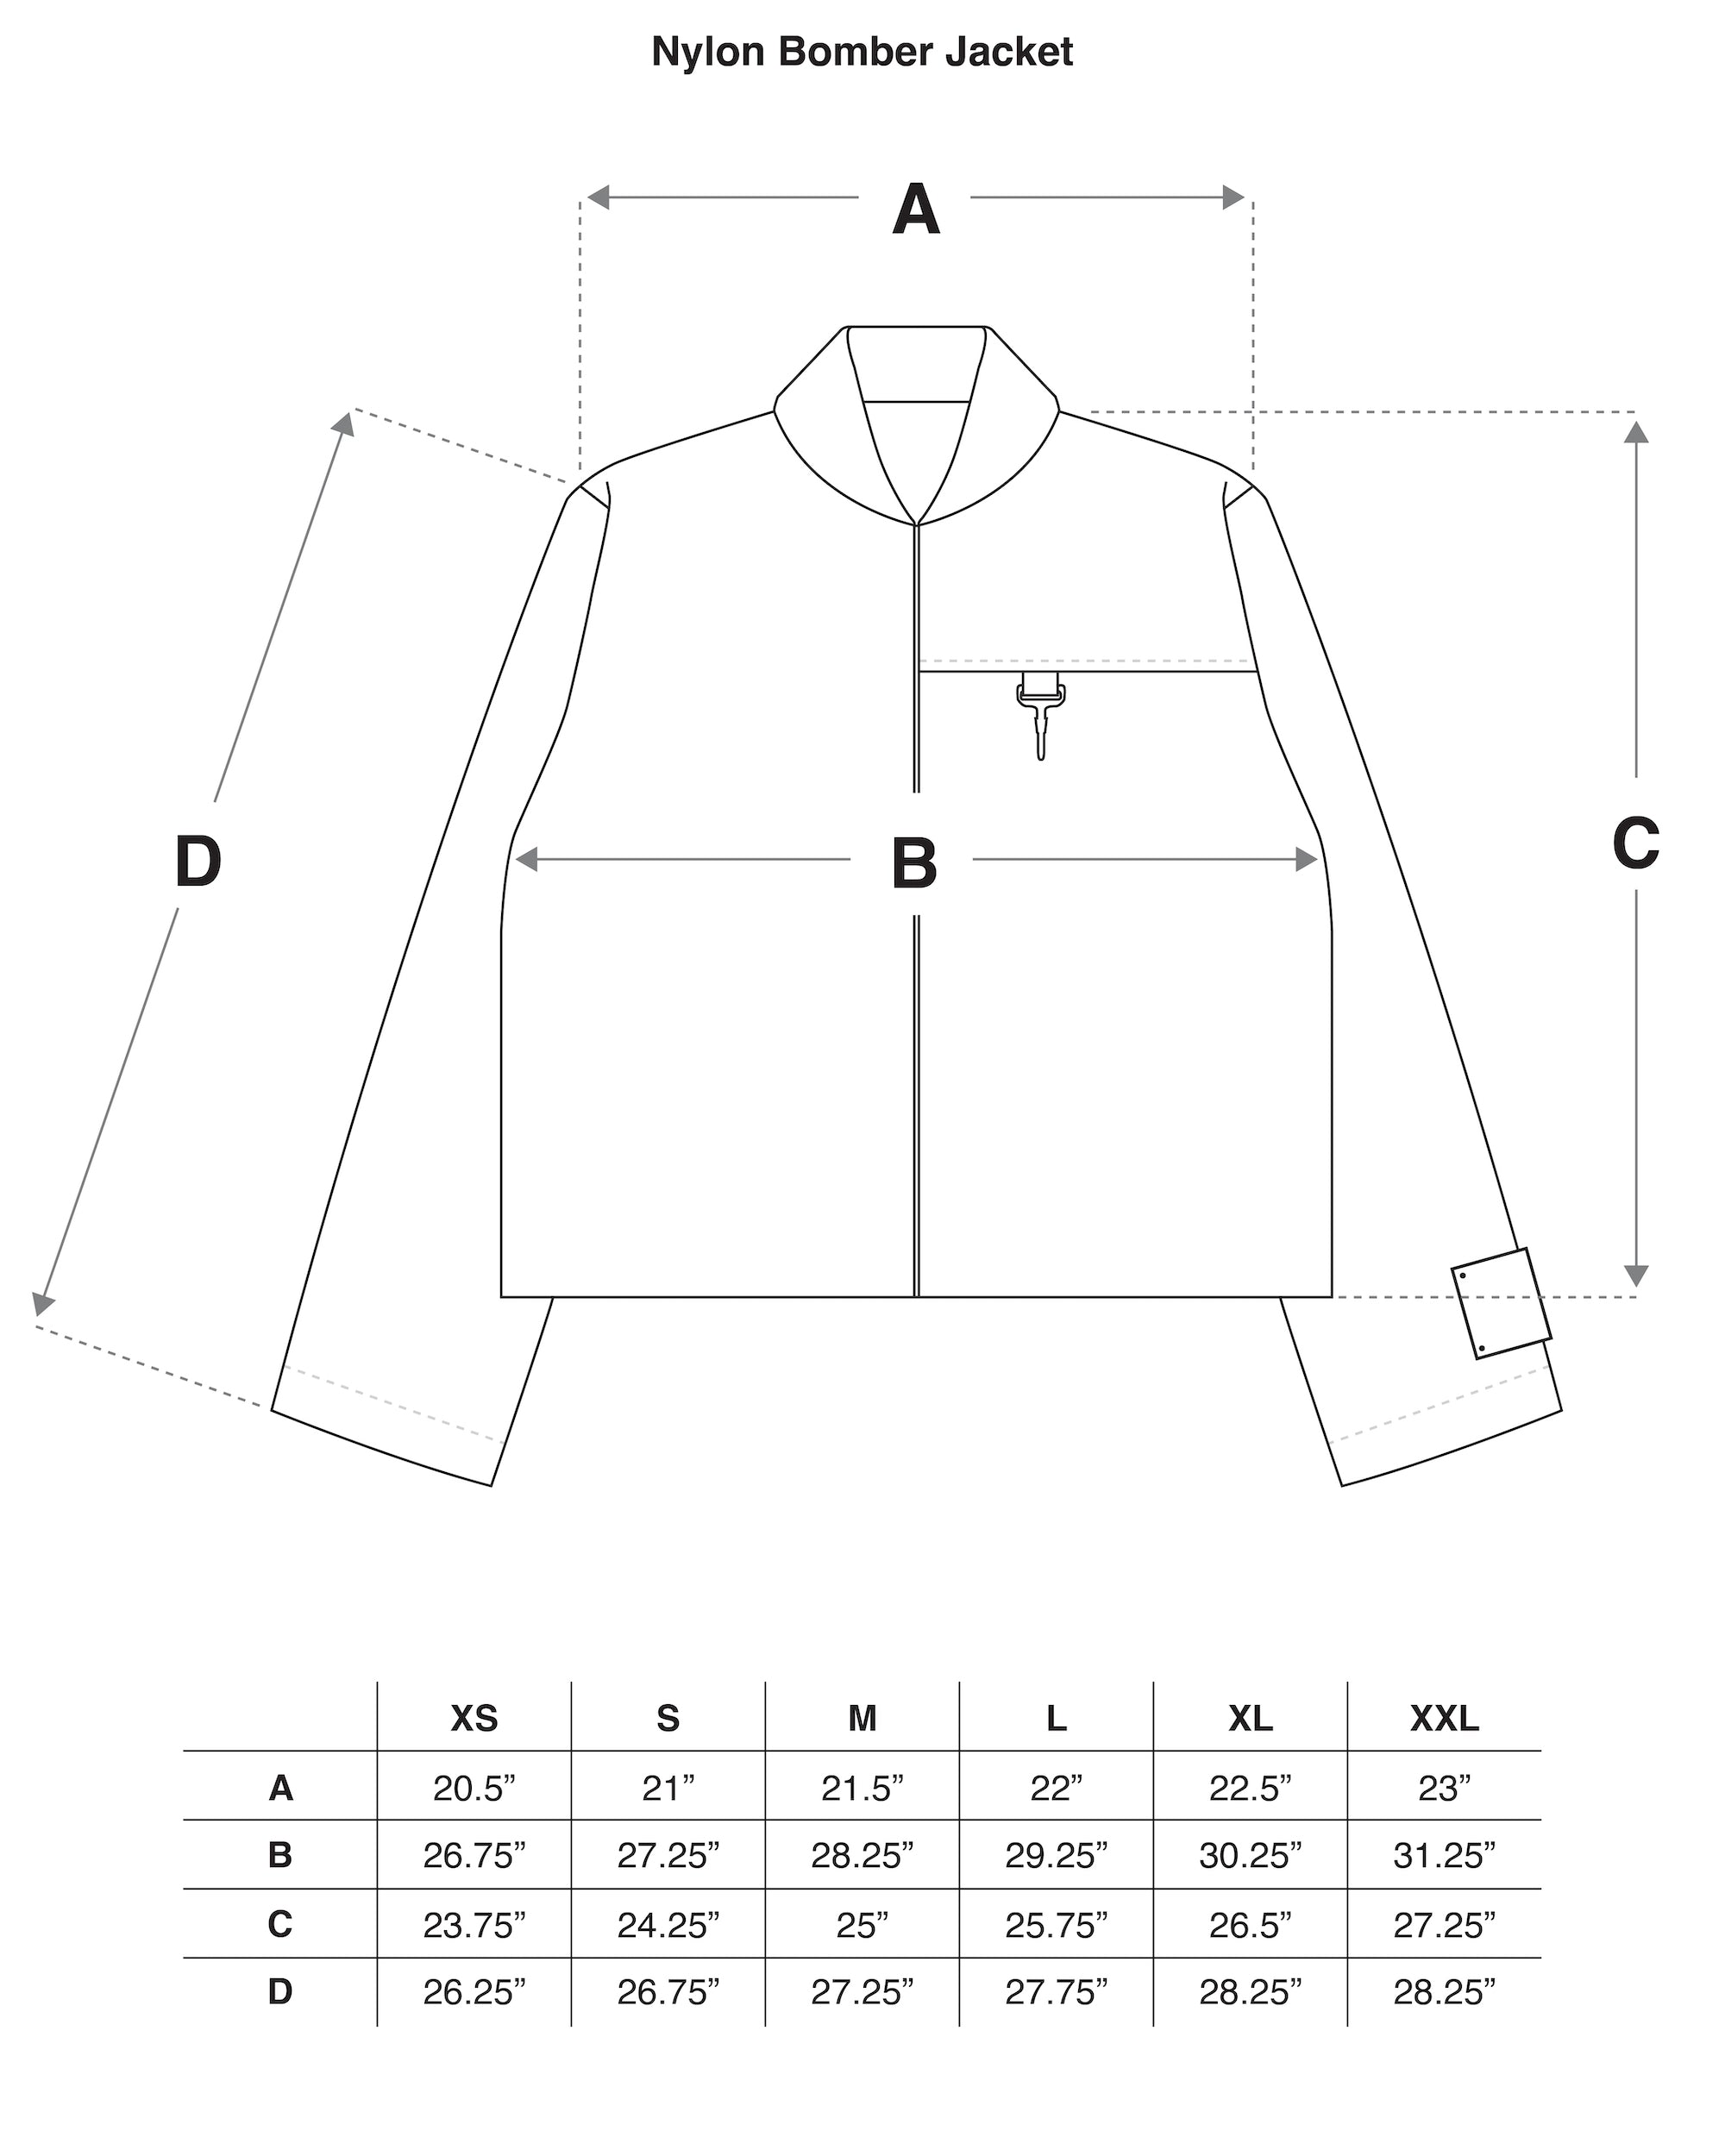 Desert Marigold Embroidered Nylon Bomber Jacket in Beige Size Guide